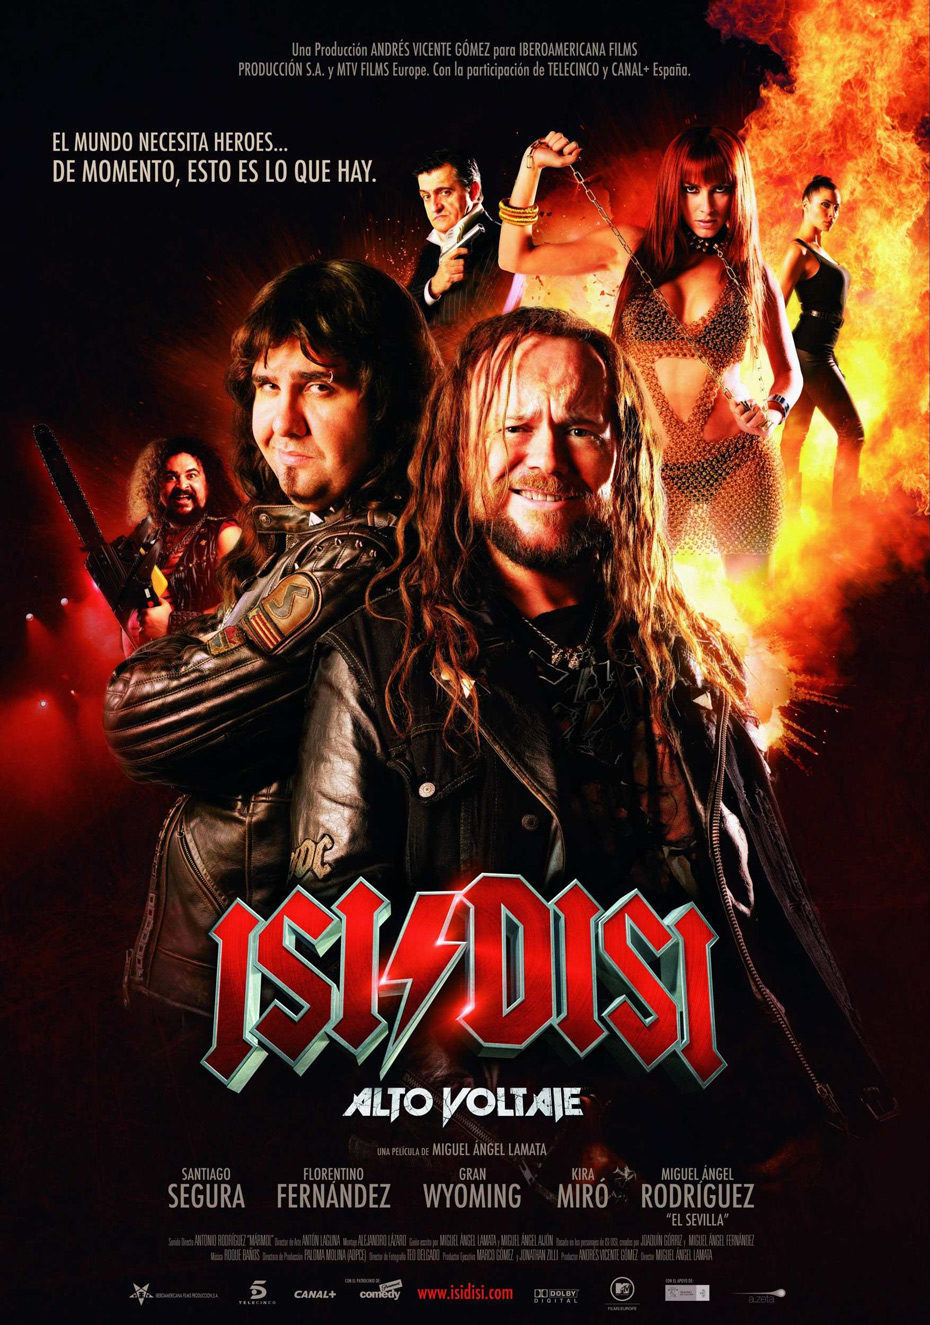 Poster of Isi/Disi: Alto voltaje - España